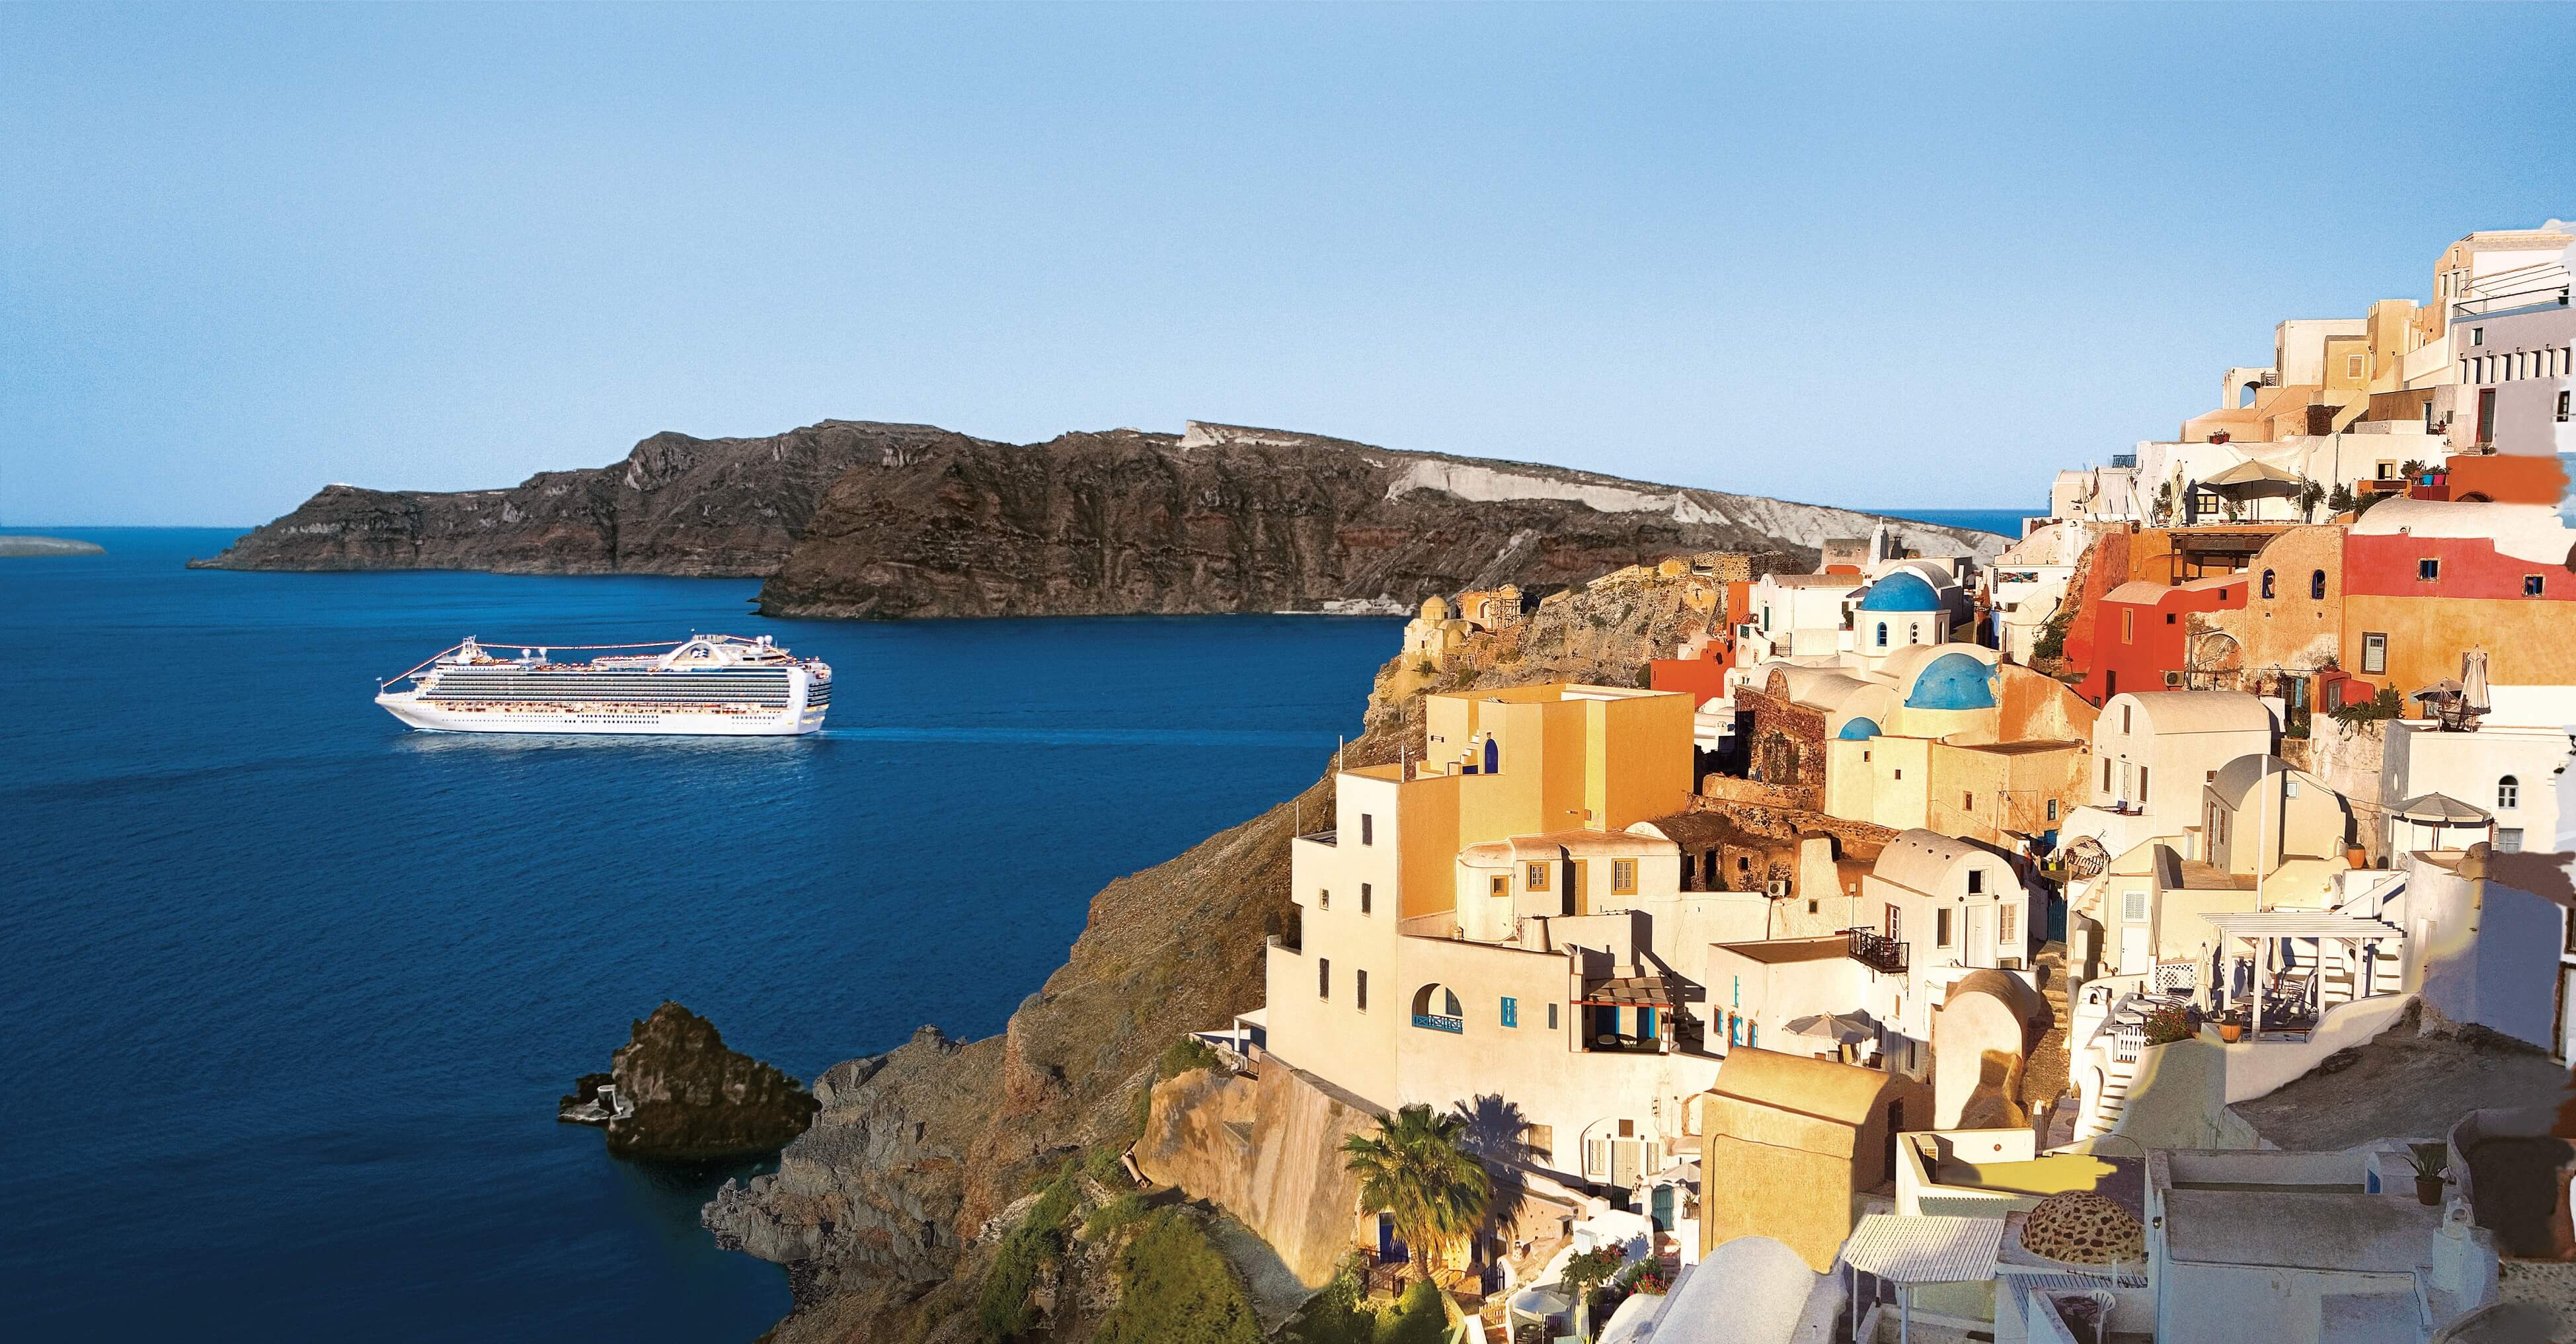 Princess Cruises launches 2021 Europe Season